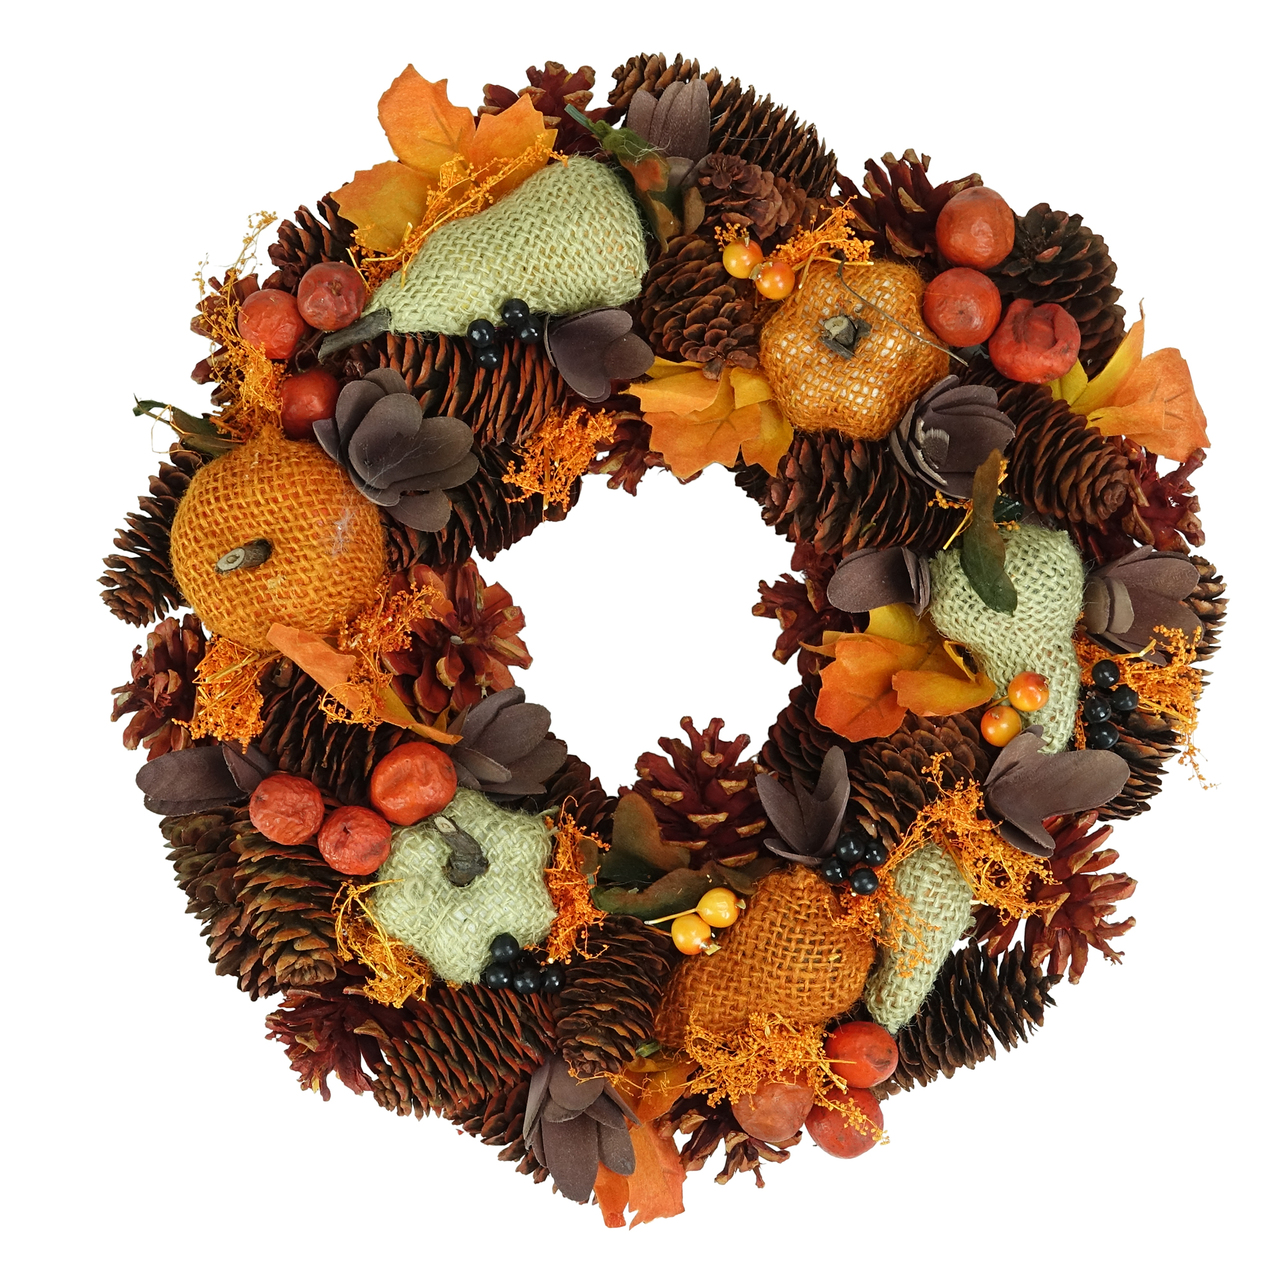 Autumn Wreath With Pumpkins & Gourds